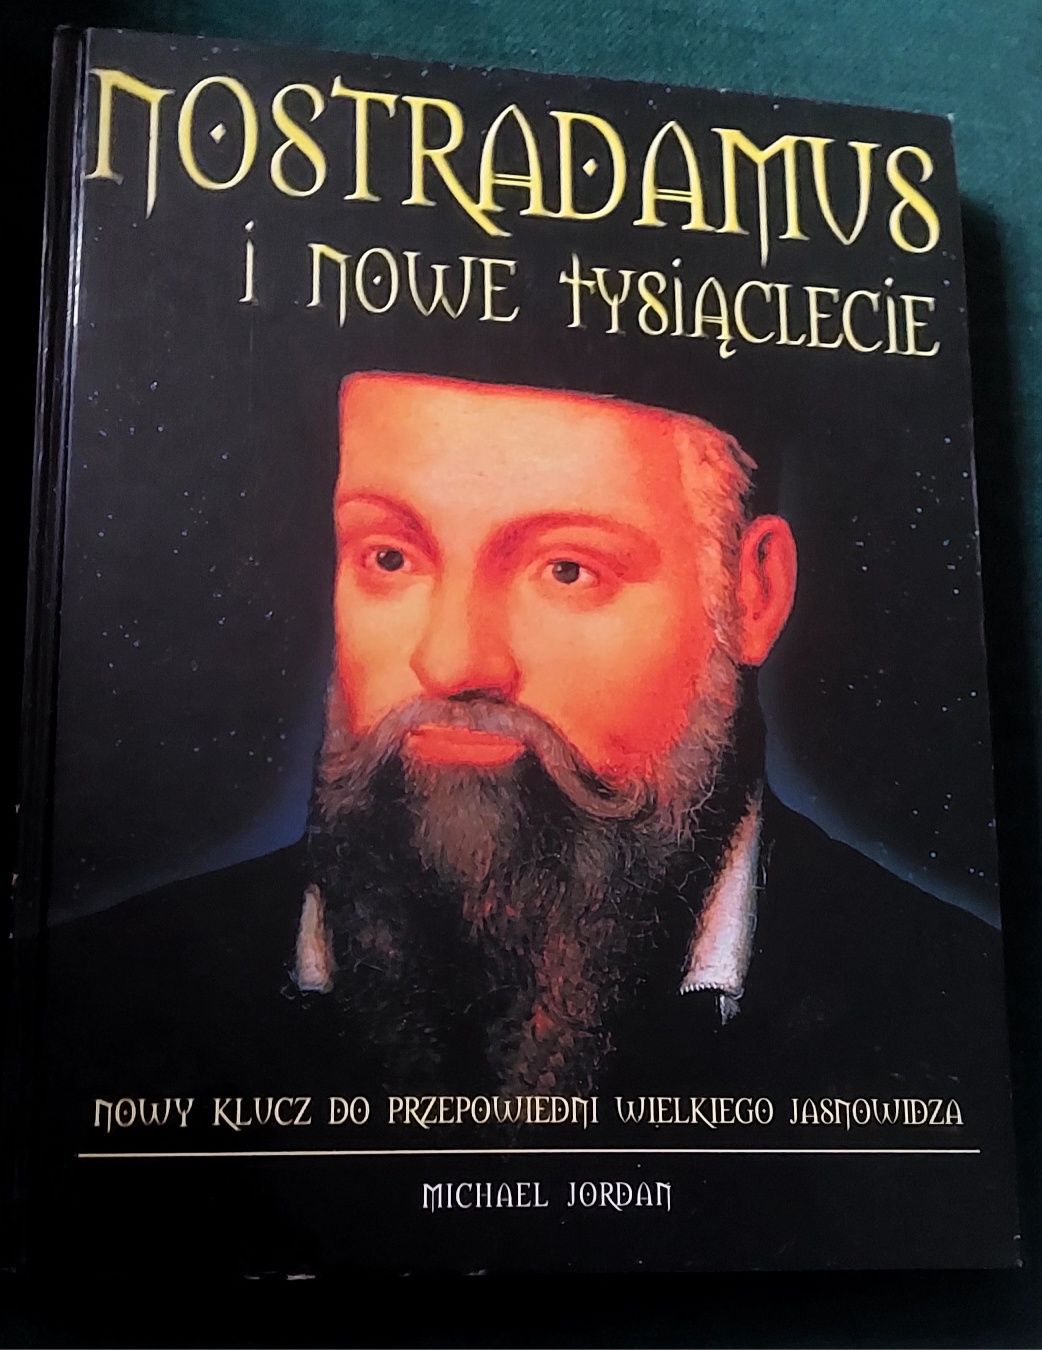 Nostradamus i nowe tysiaclecie